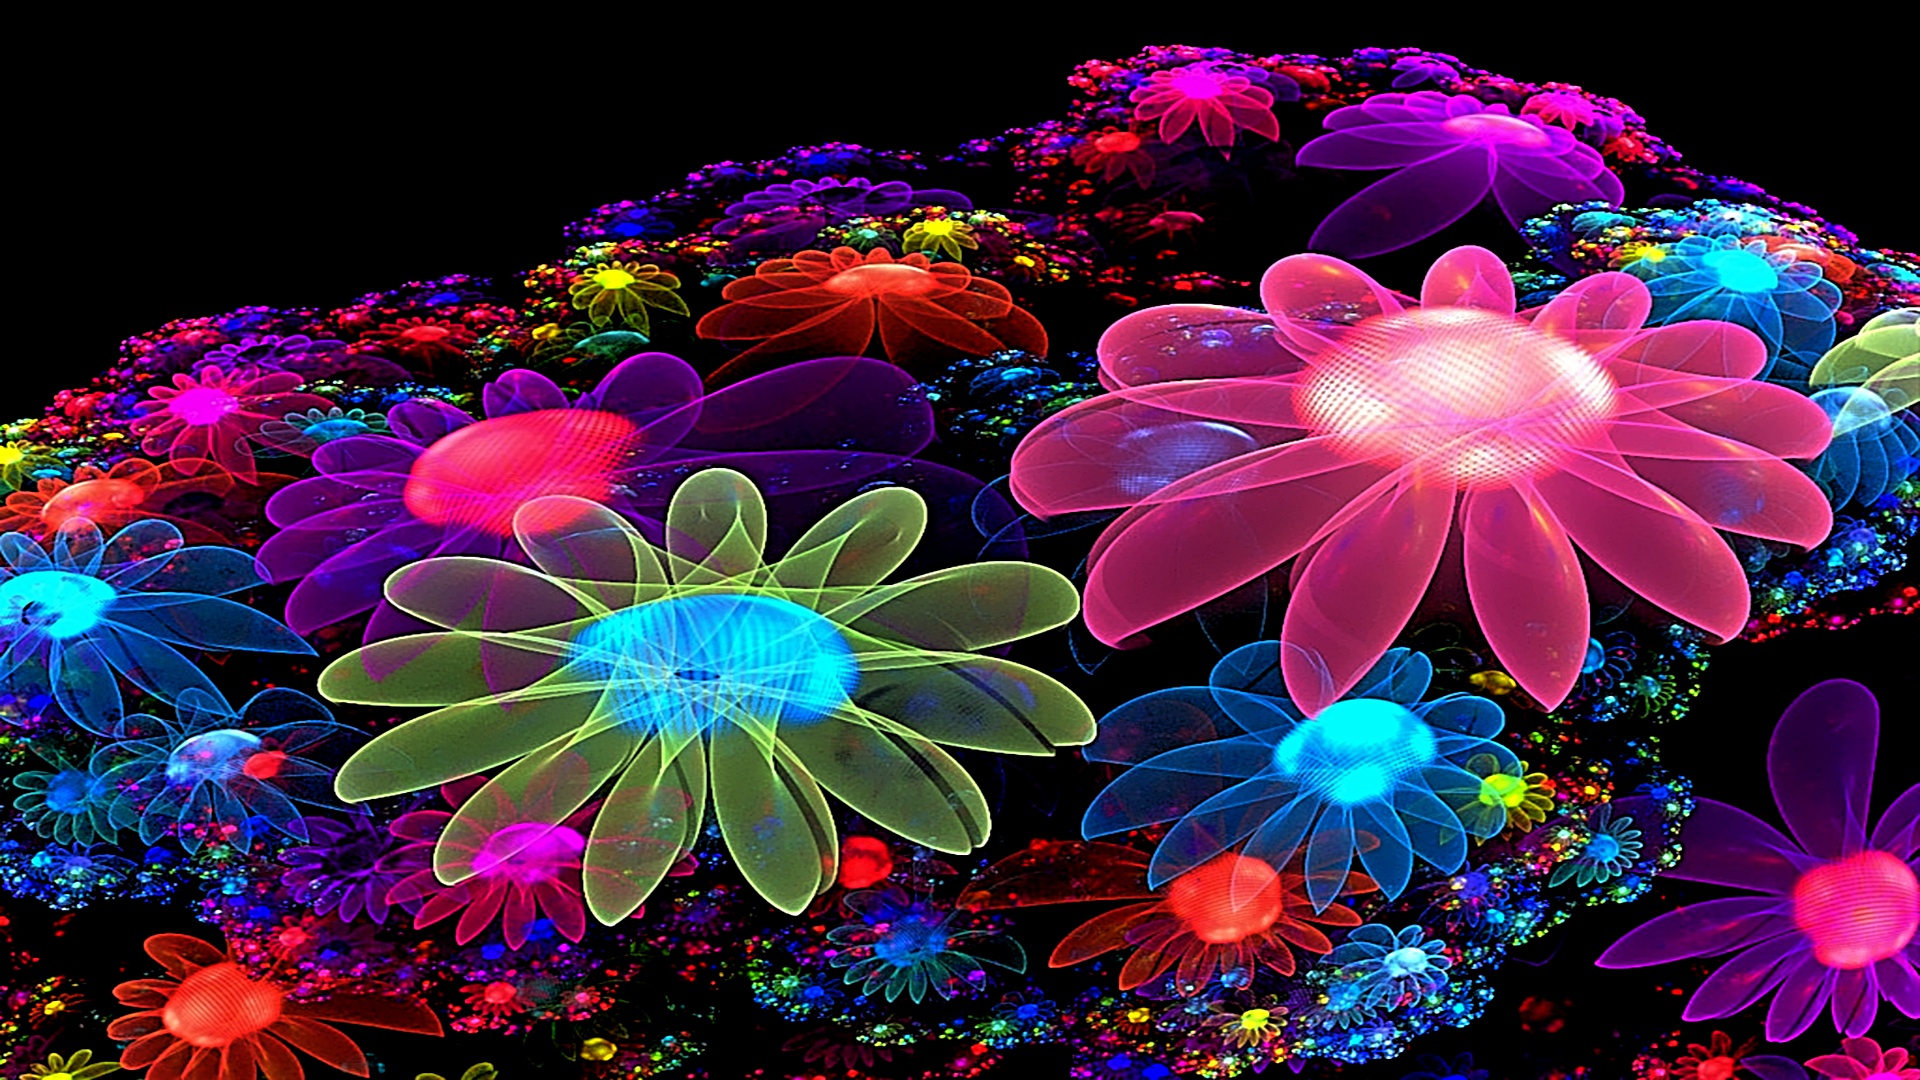  Colorful Flowers Desktop Wallpapers Images   Fullsize Wallpaper 1920x1080